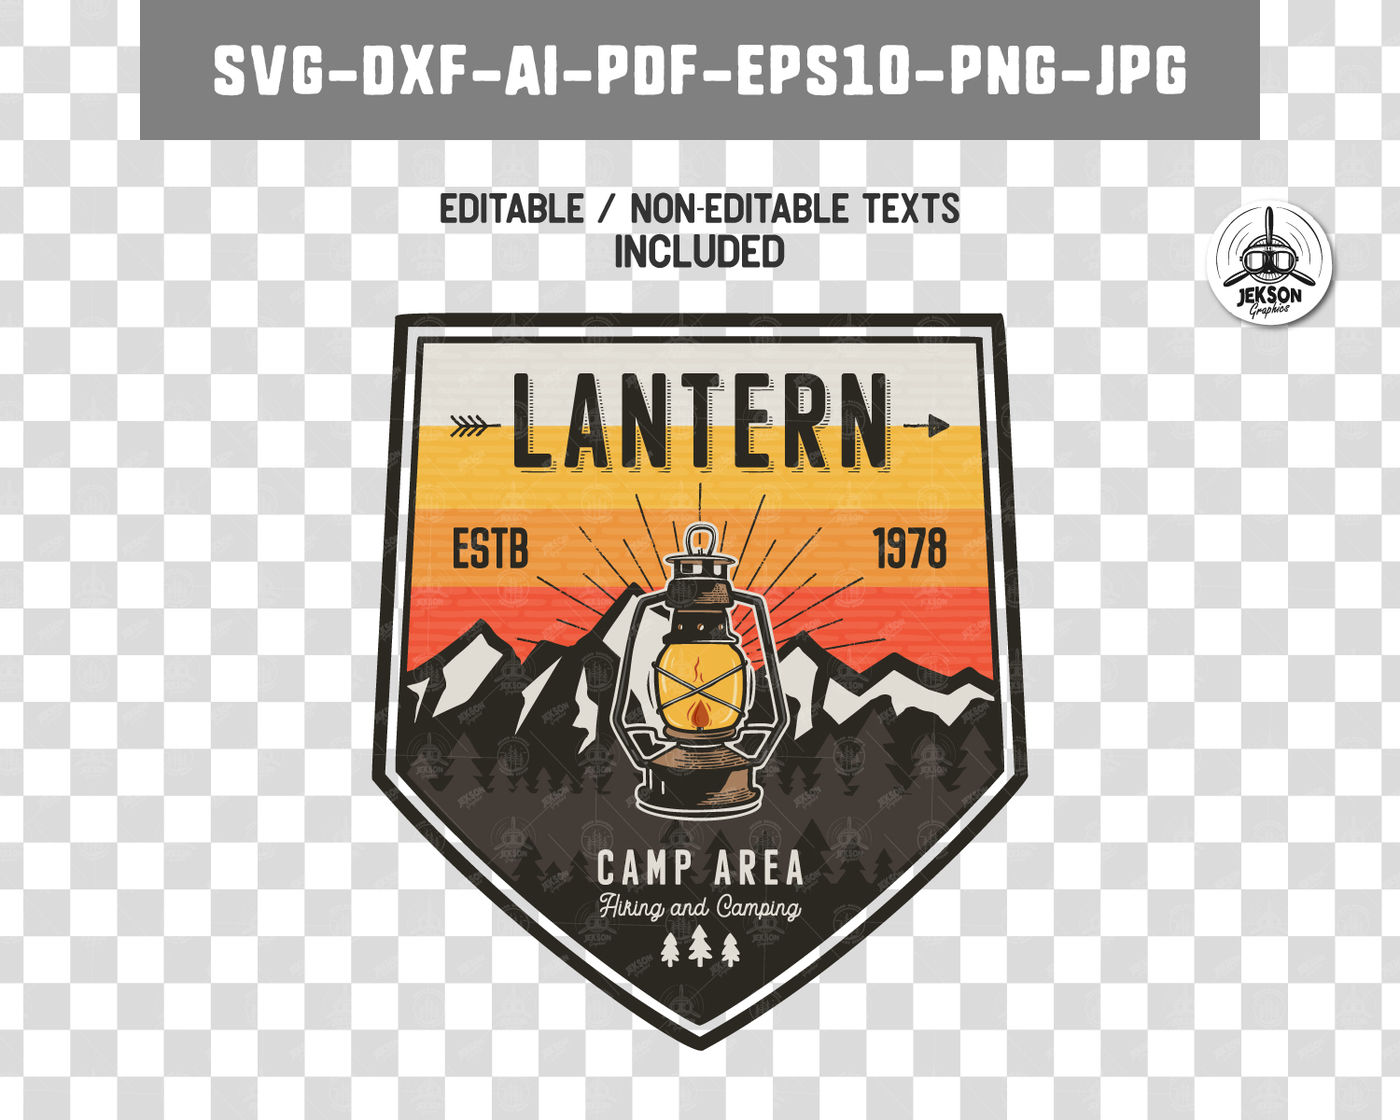 Download Camp Lantern Badge Vintage Travel Logo Patch Svg By Jekson Graphics Thehungryjpeg Com